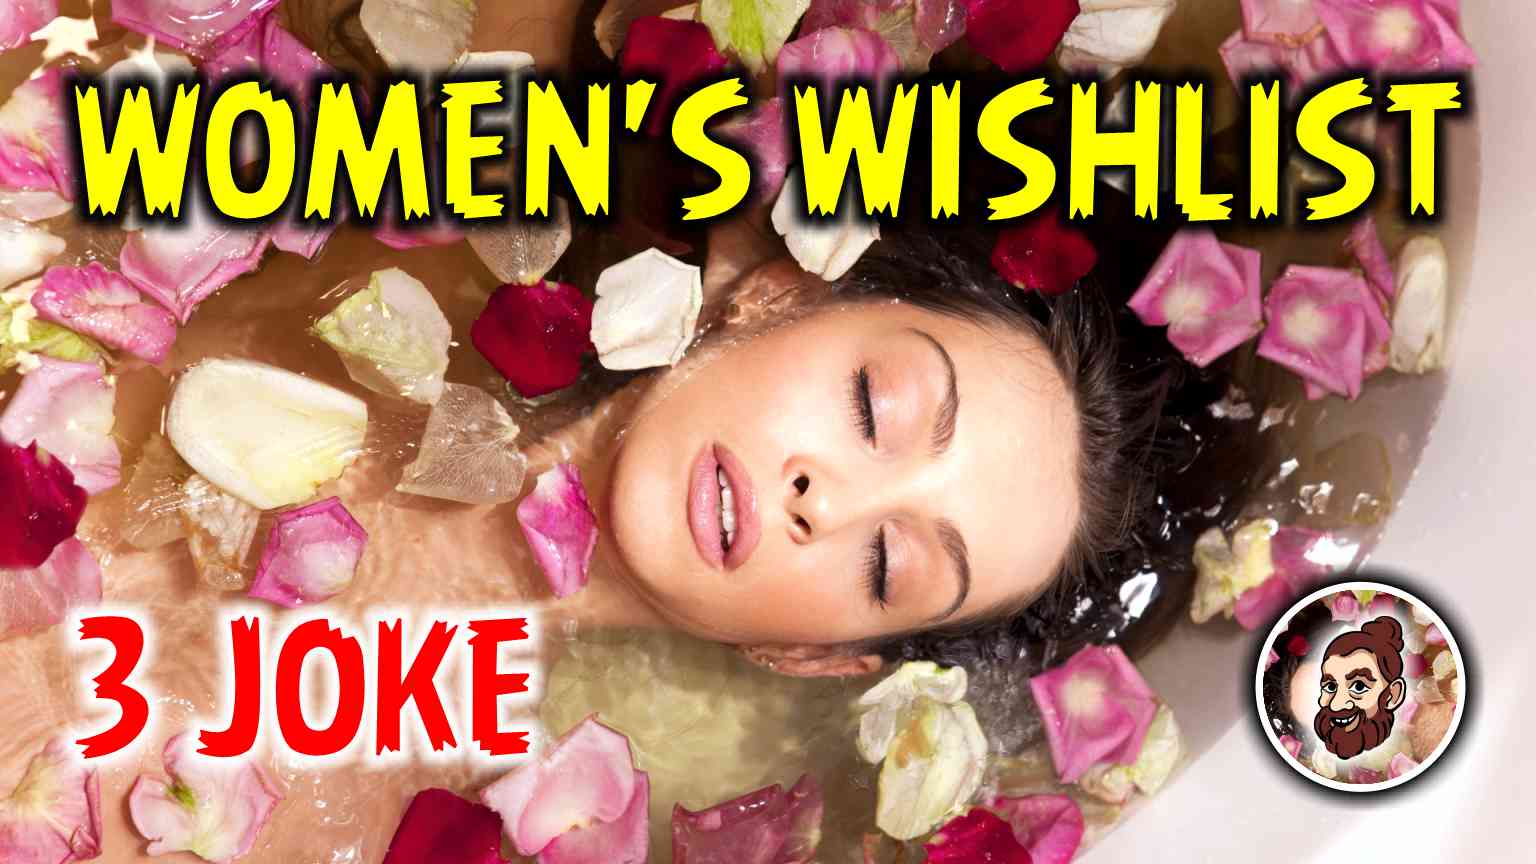 Women's wishlist